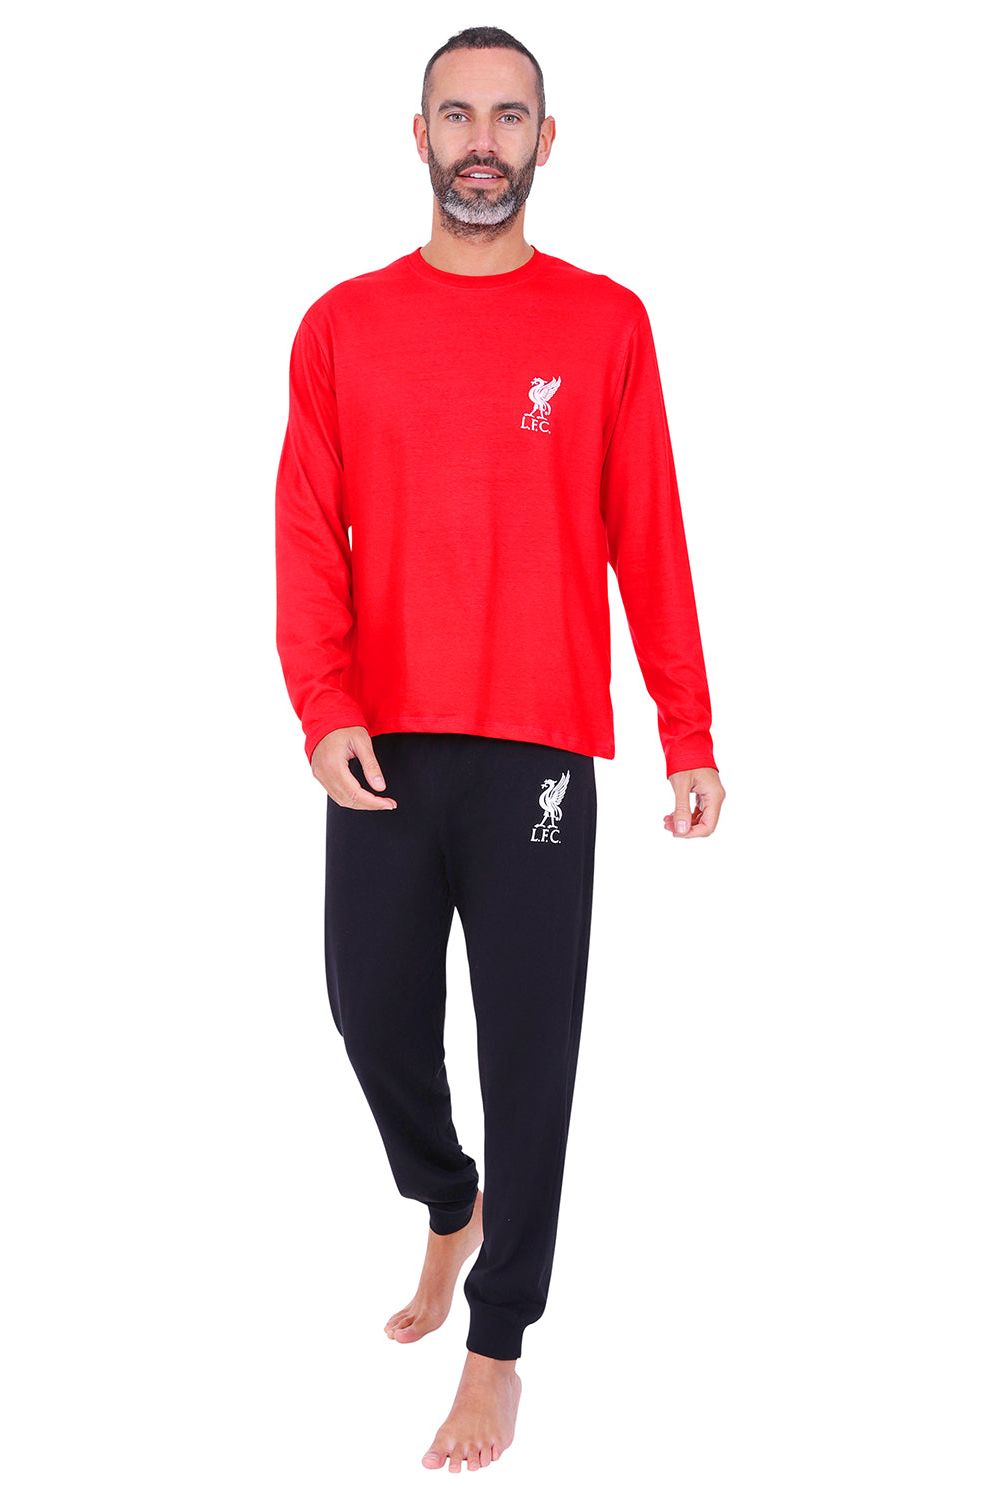 Mens Official Liverpool Football Club Red Long Pyjamas